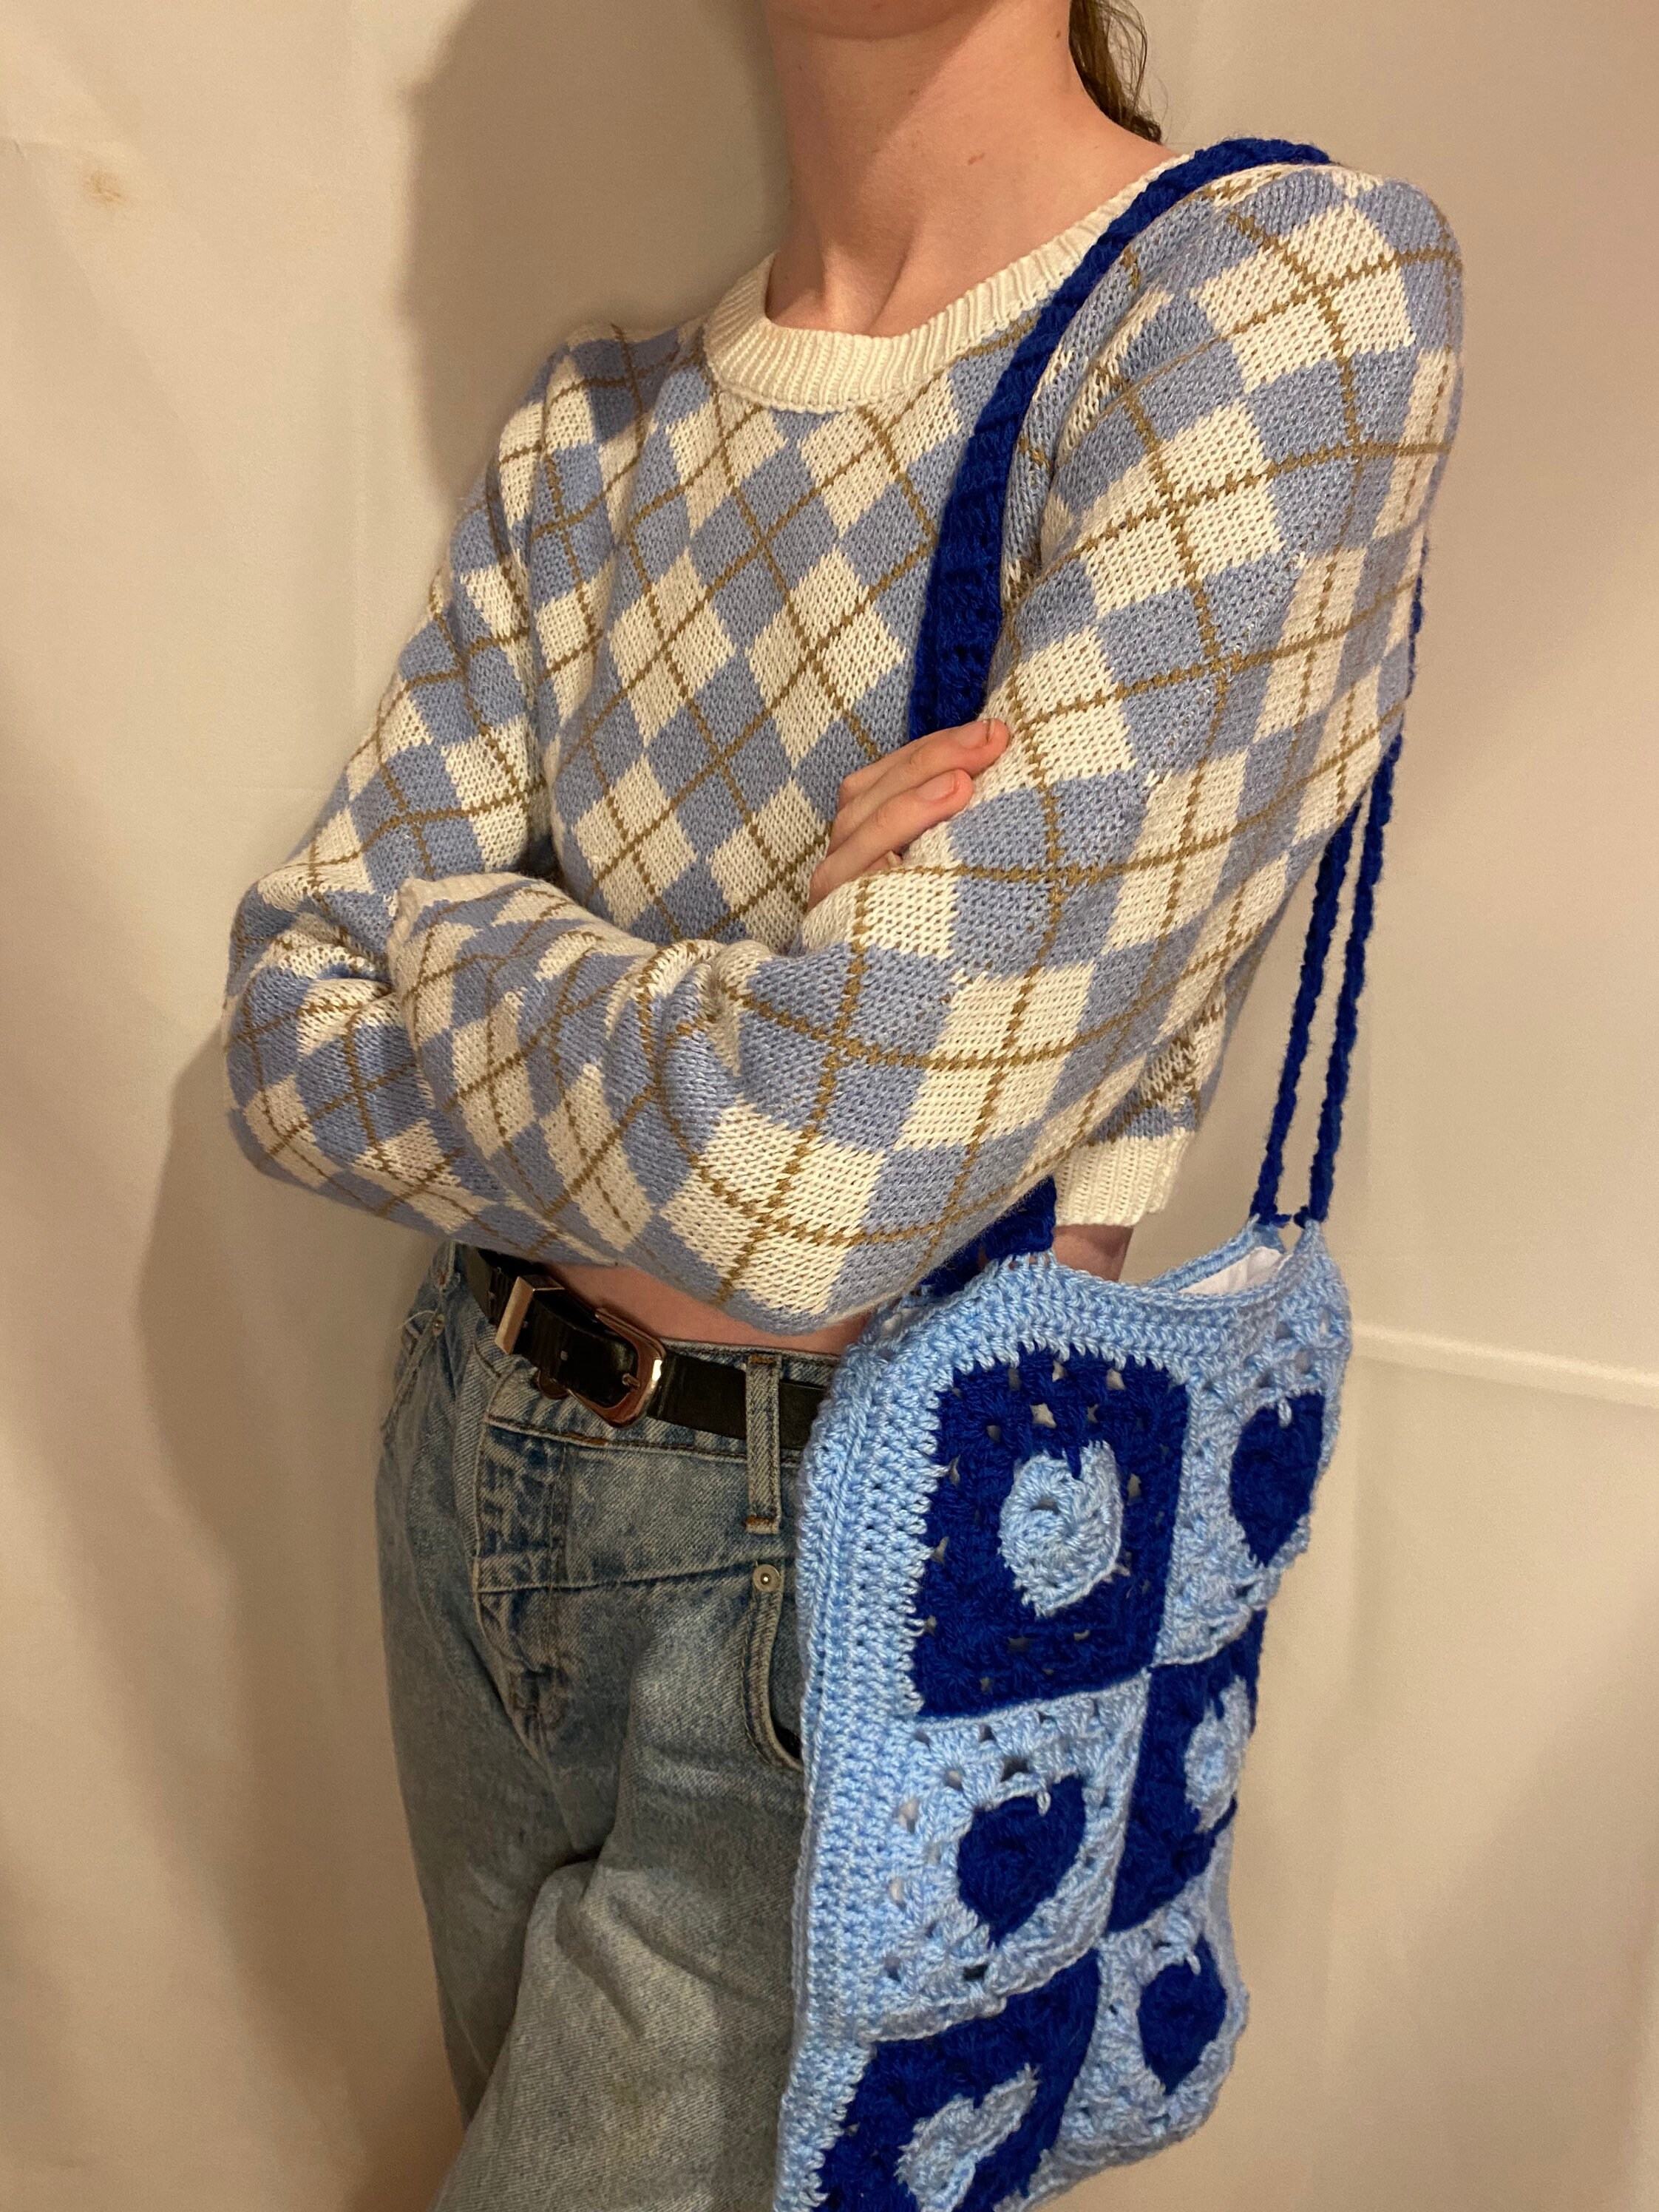 Heart Tote Bag ♥️ : r/crochet